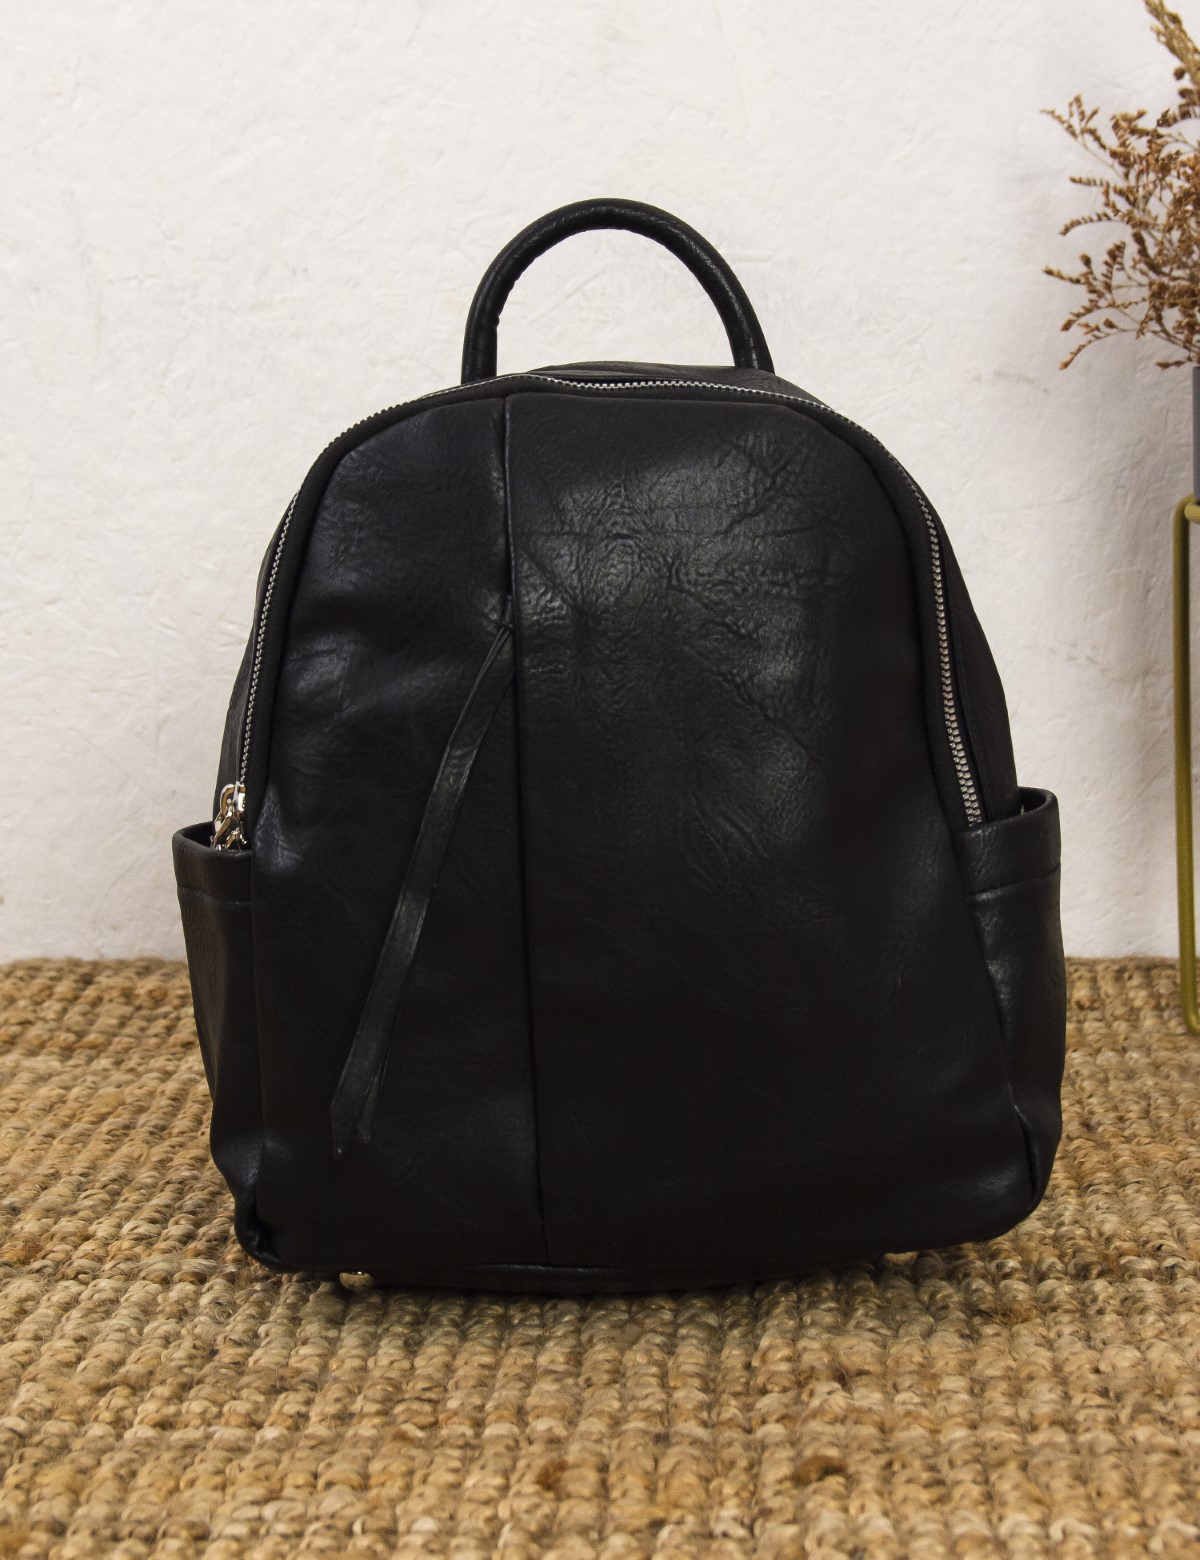 Huxley and Grace Γυναικειο μαυρο mini Backpack δερματινη CK5690